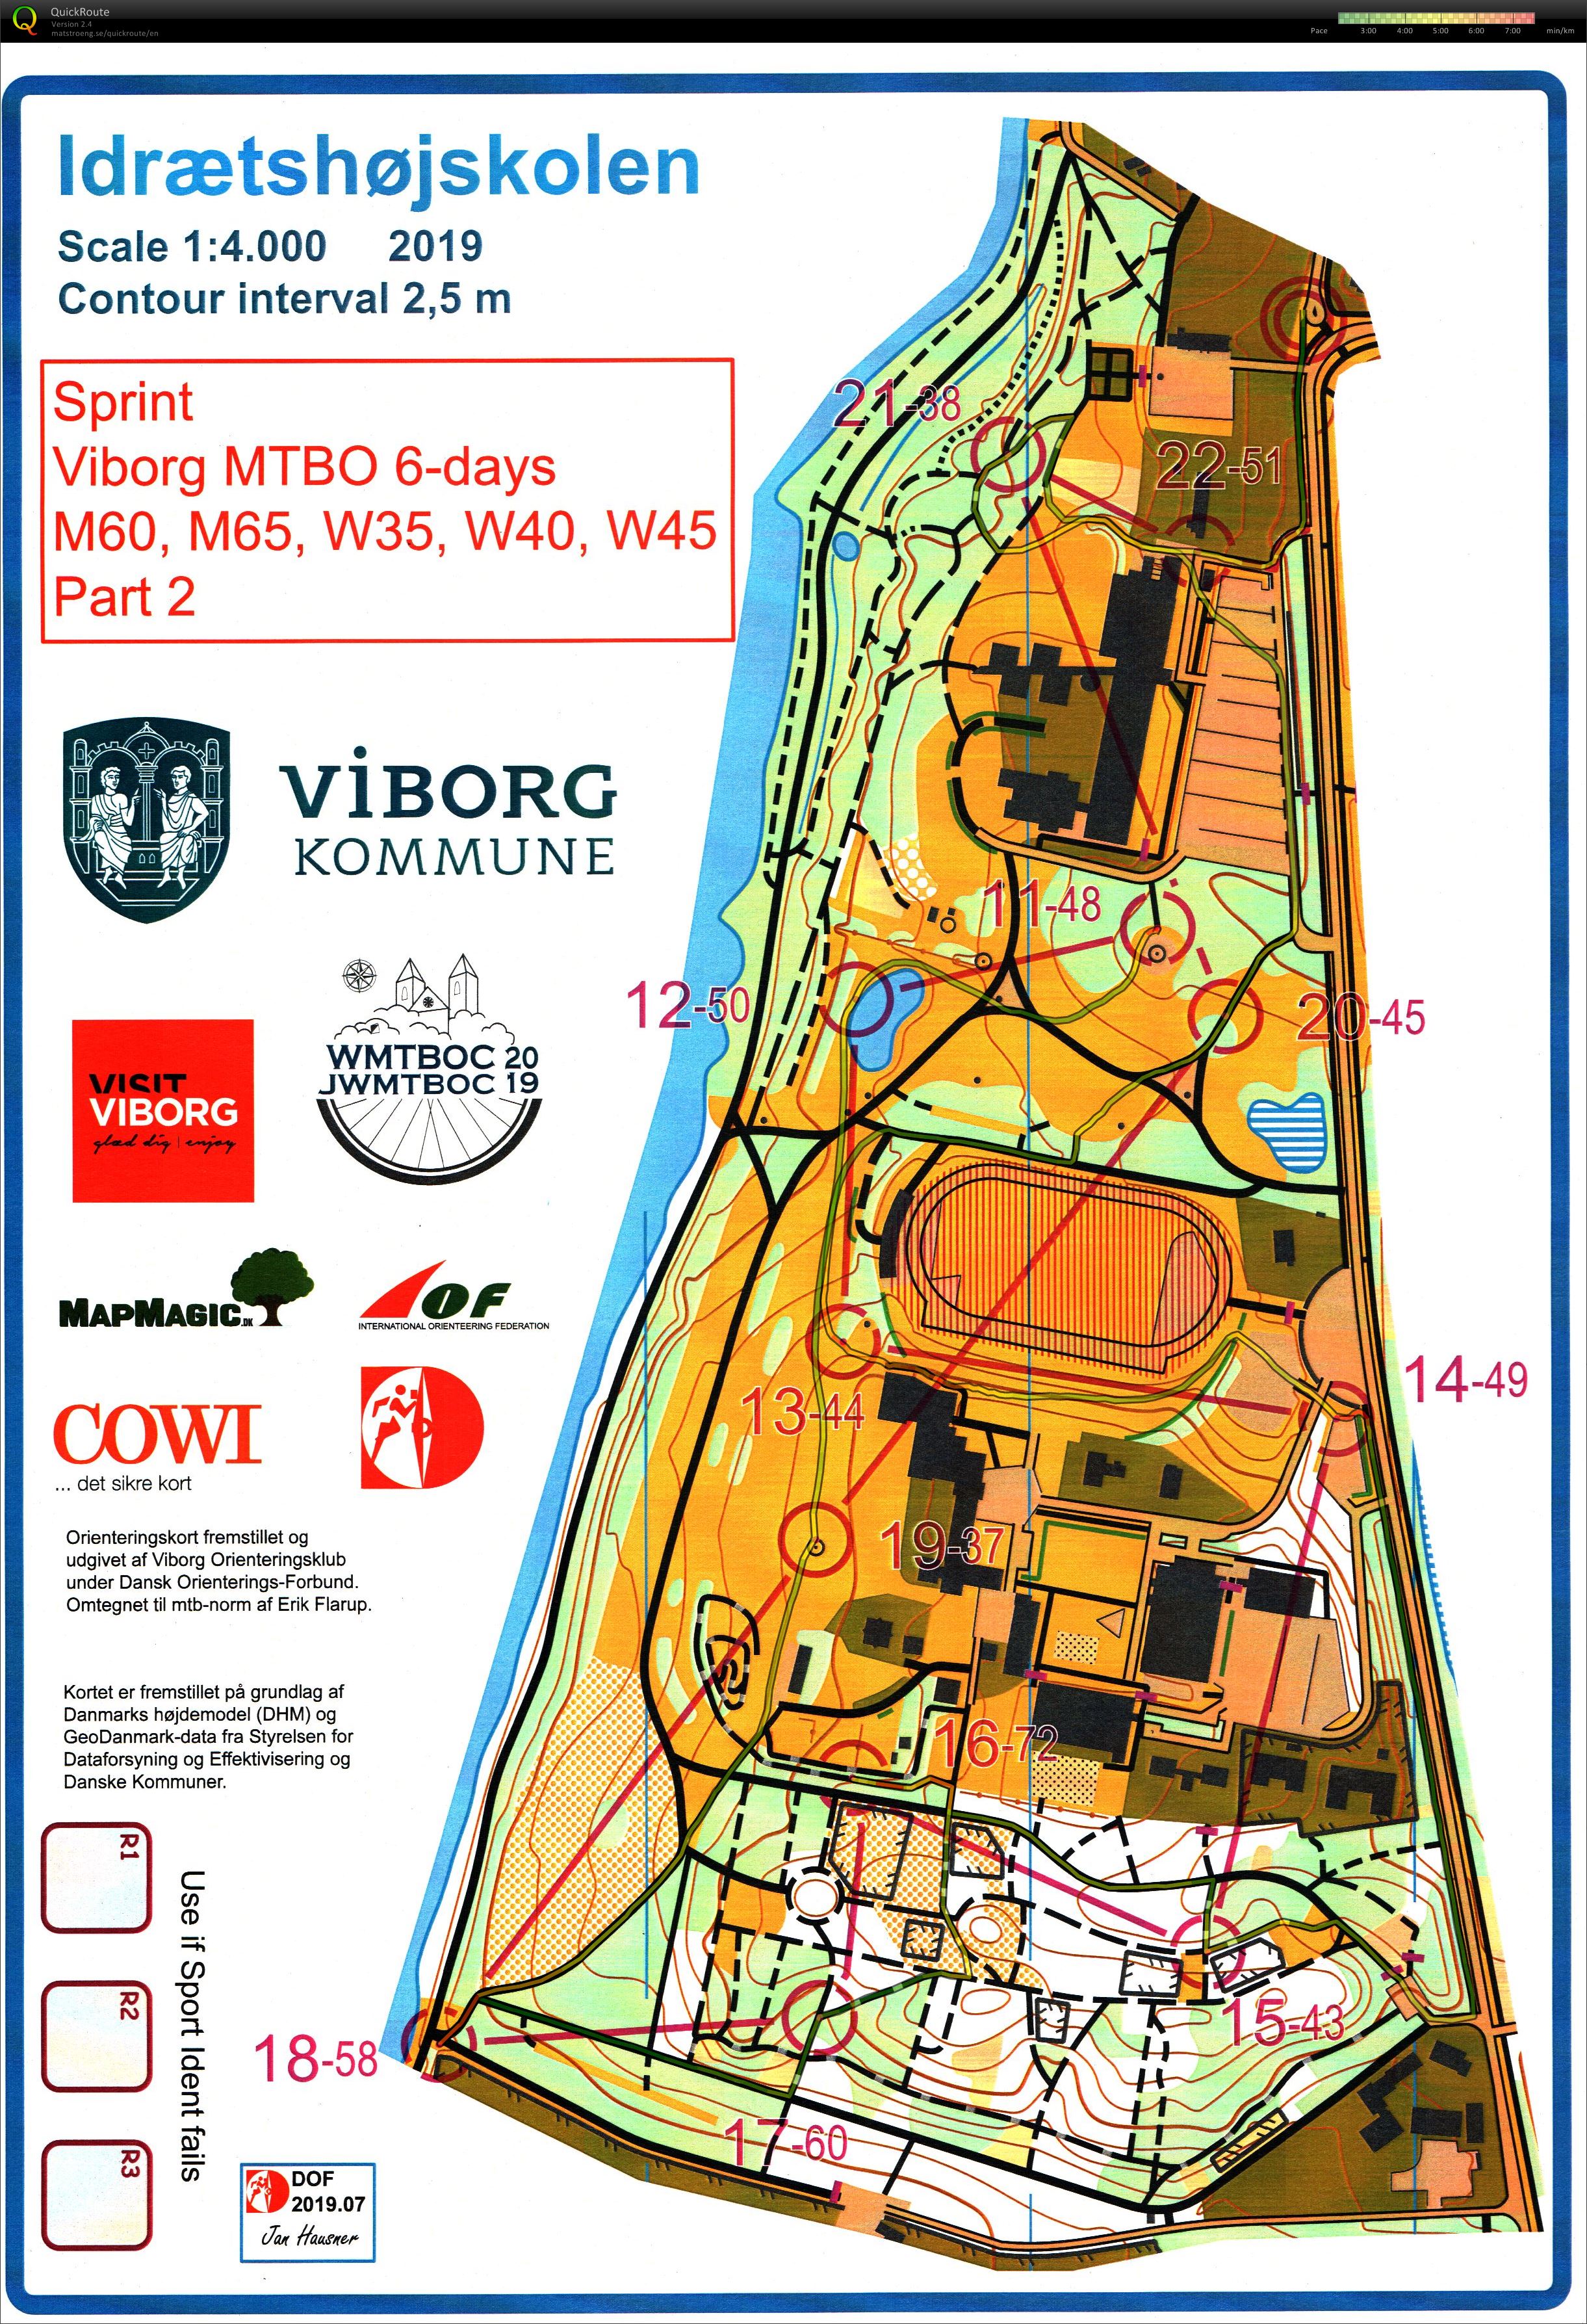 Viborg MTBO 6 days - Stage 1 (28-07-2019)